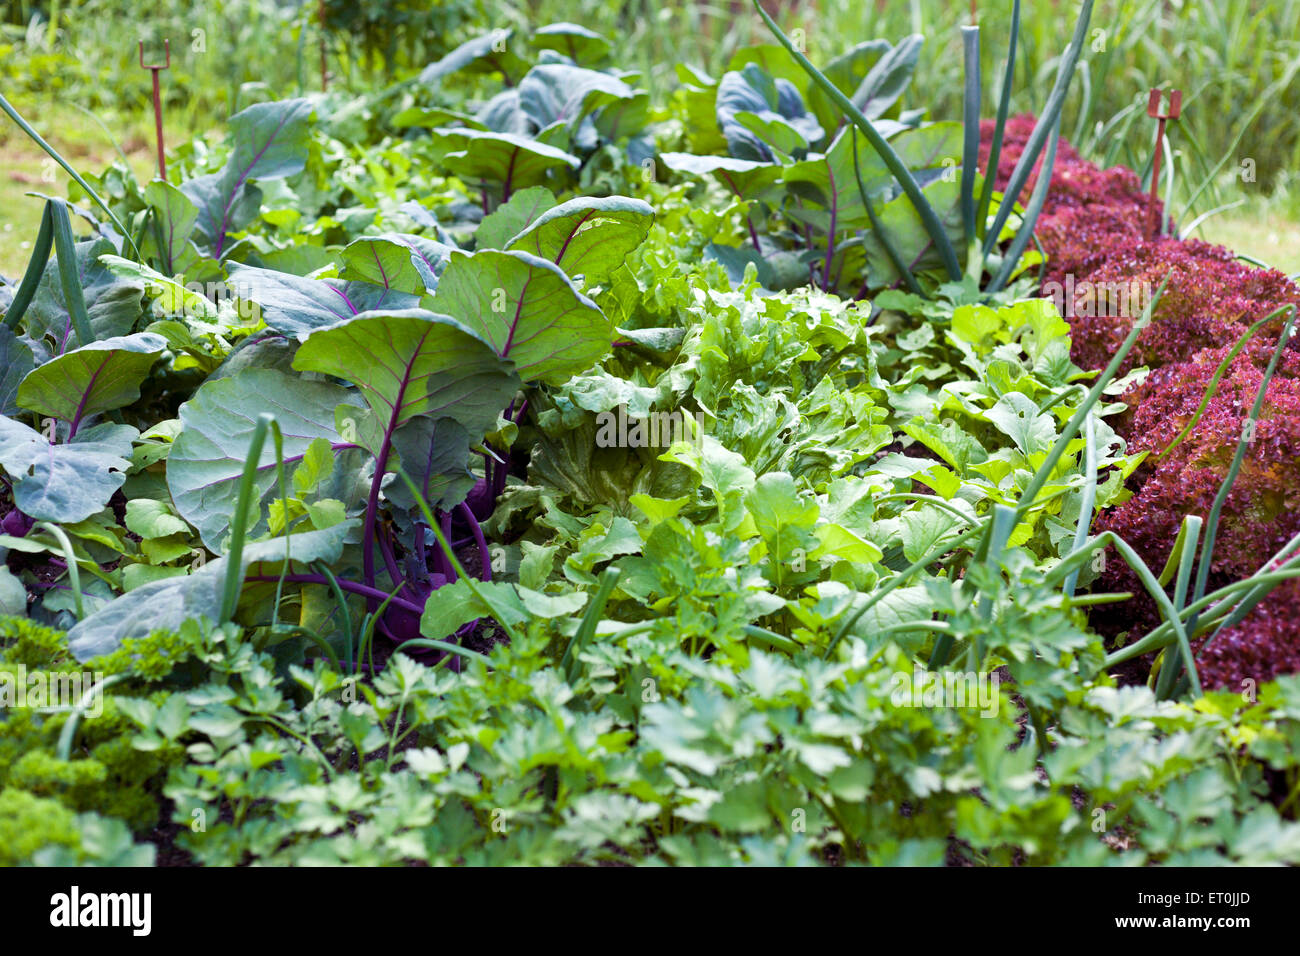 Vegetable garden with parsley, radicchio, lettuce, turnip, leek Stock Photo